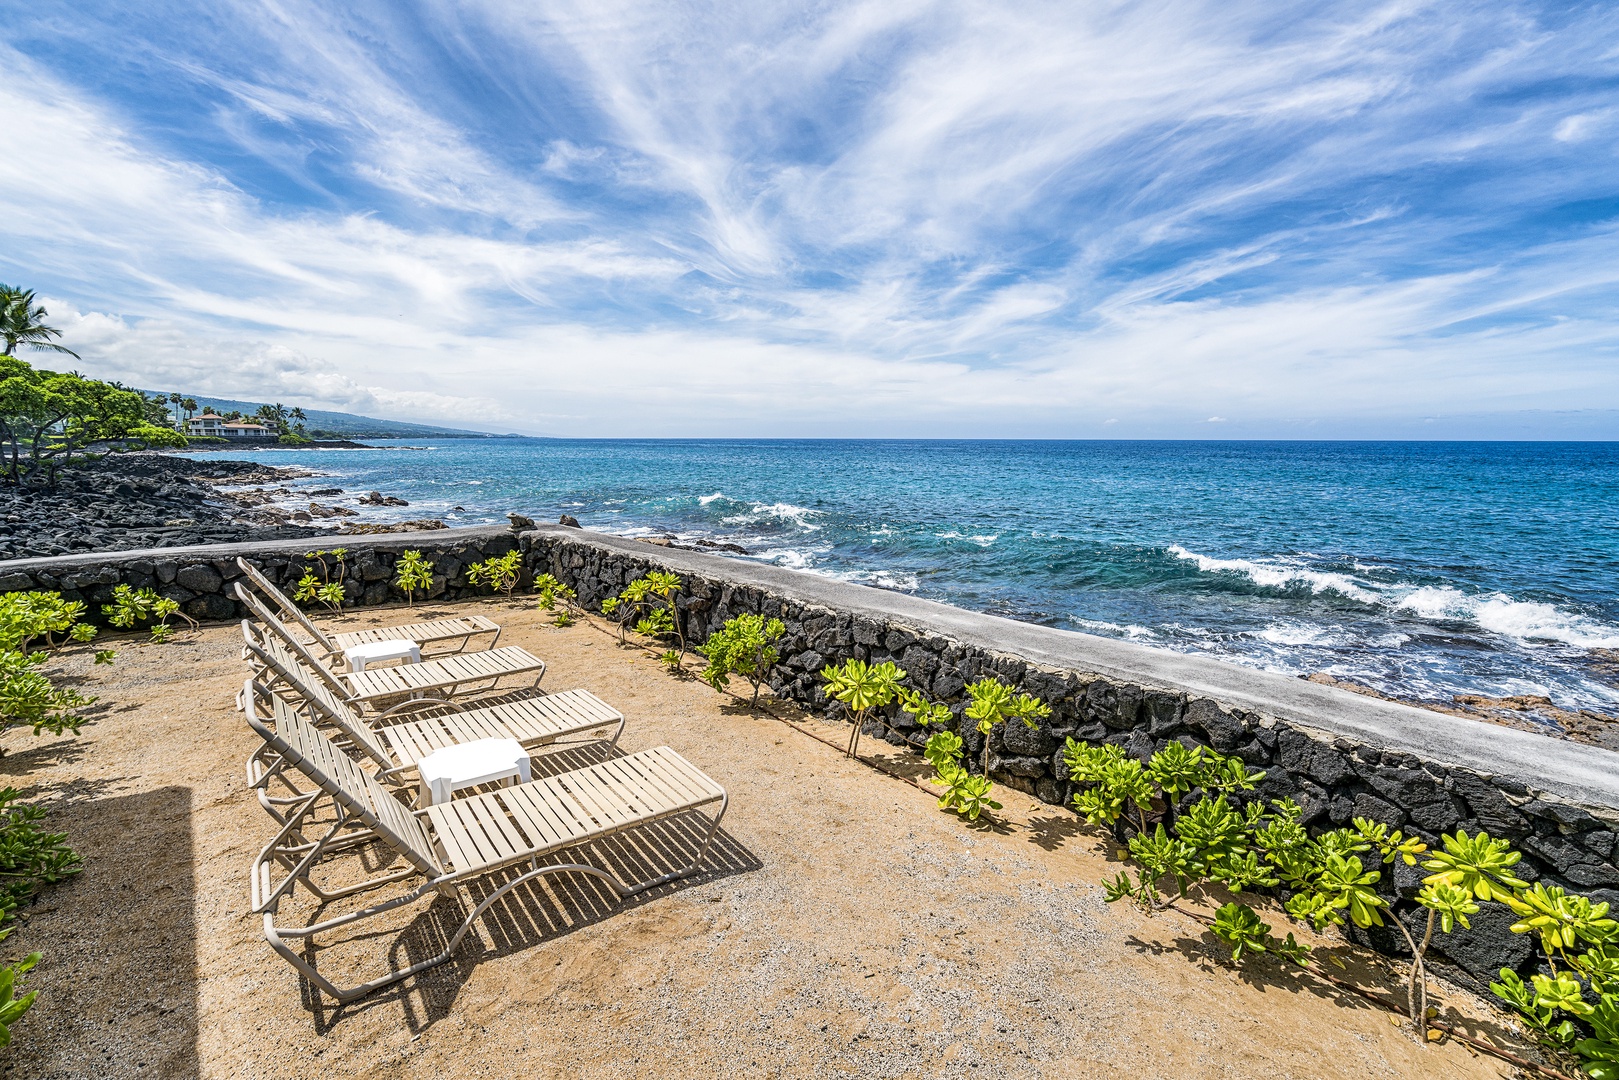 Kailua Kona Vacation Rentals, Casa De Emdeko 104 - Lounge ocean side work on that tan!